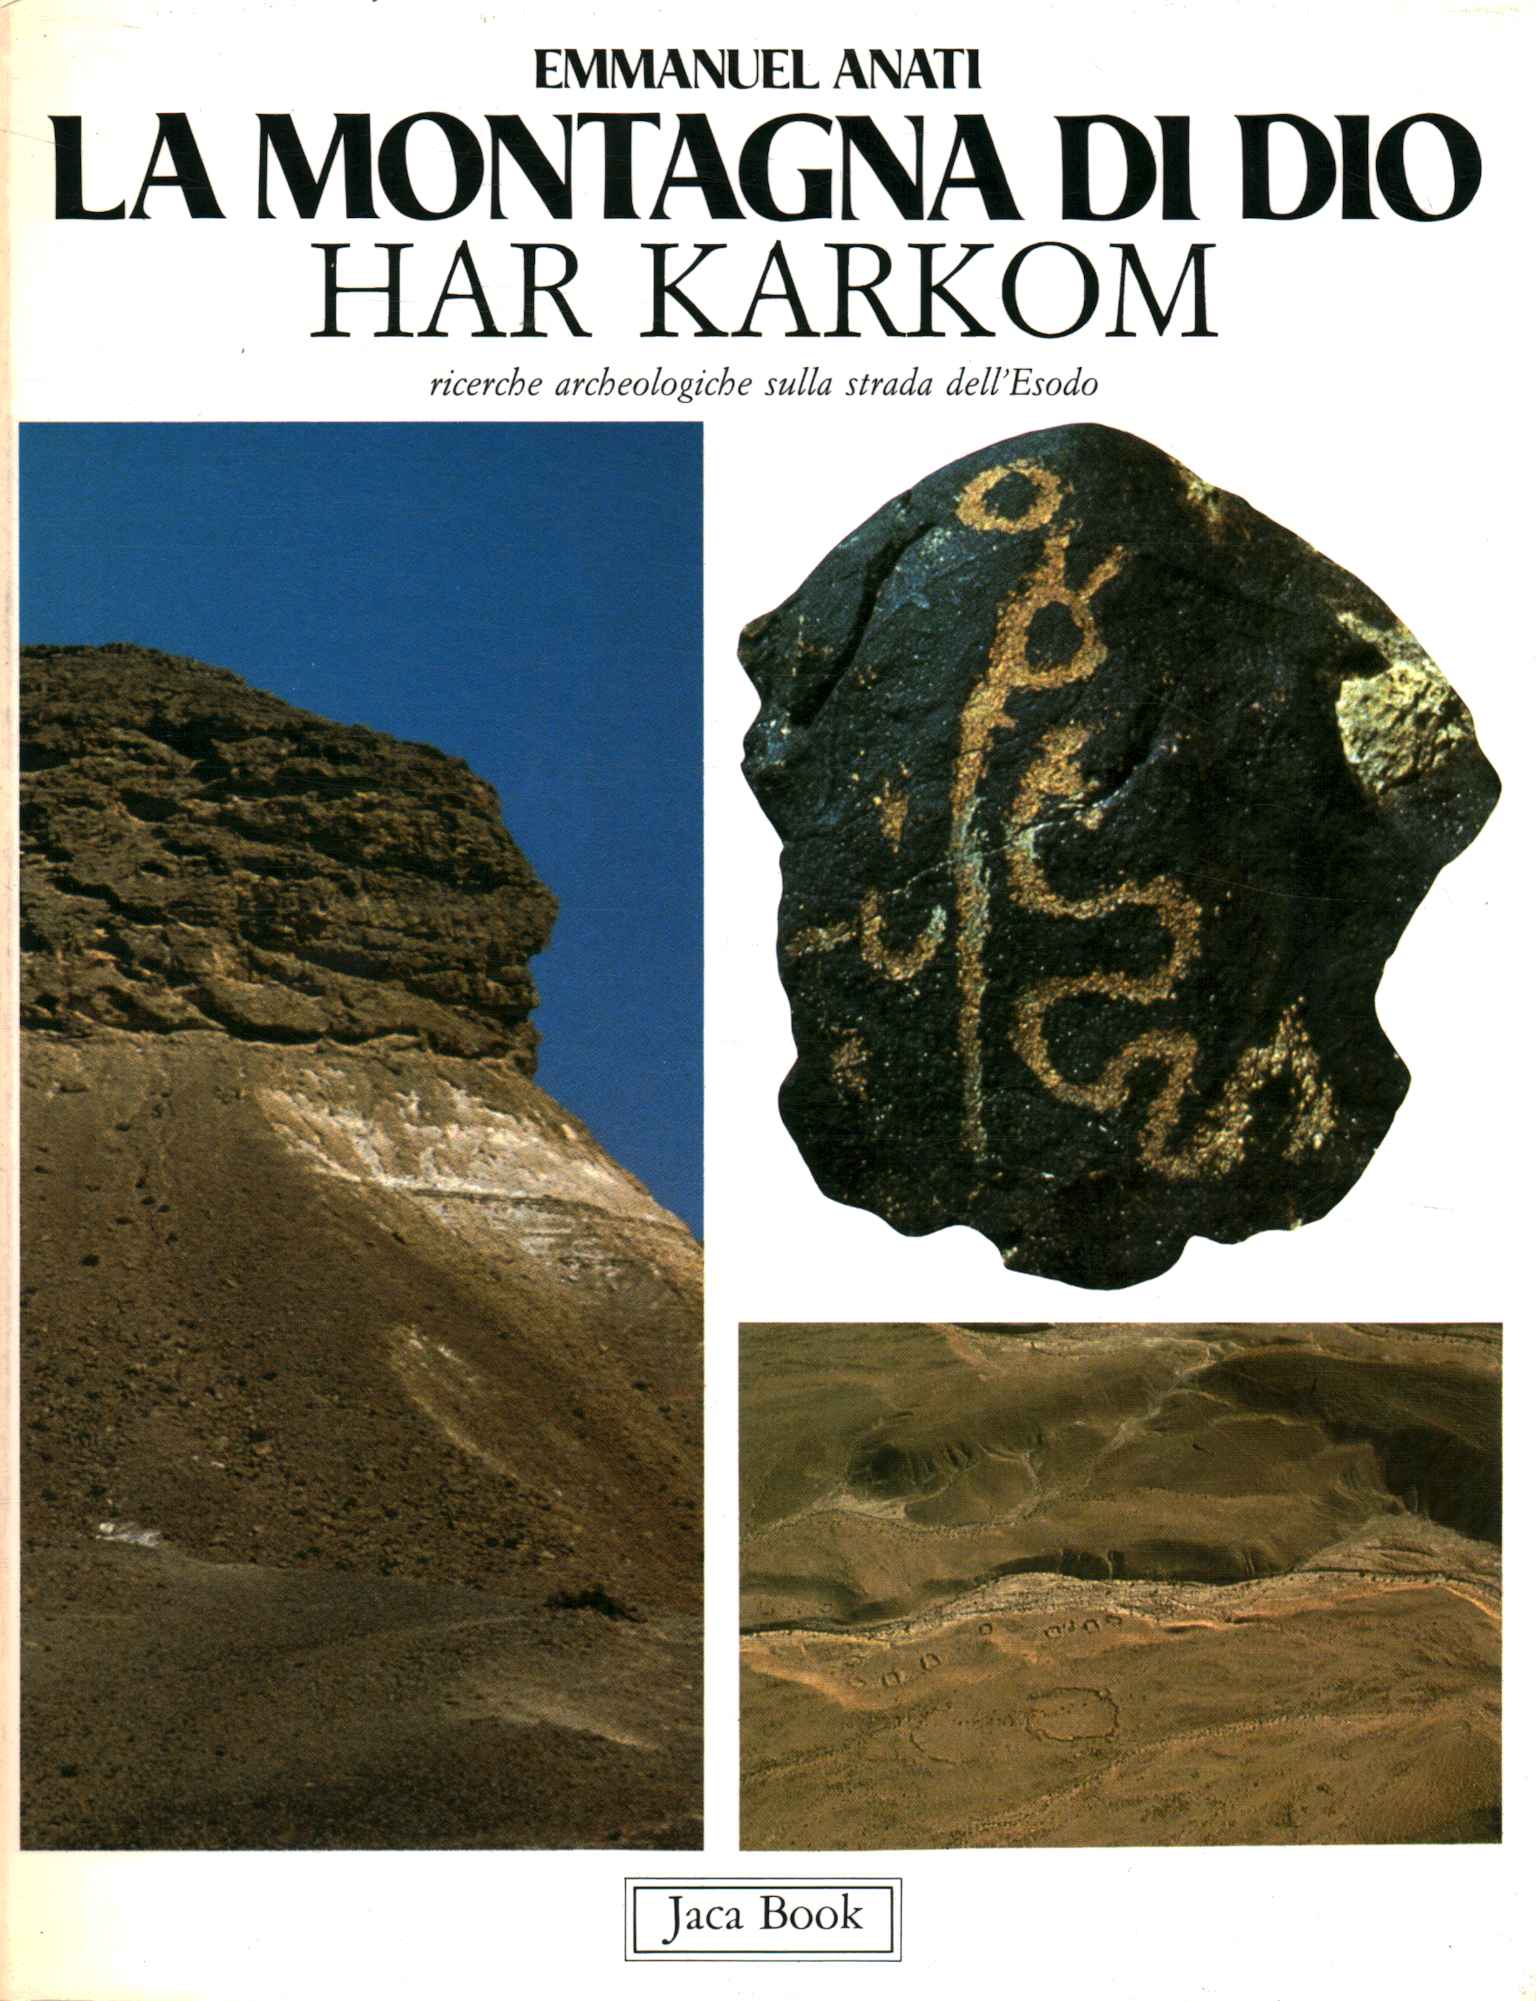 The mountain of God Har Karkom